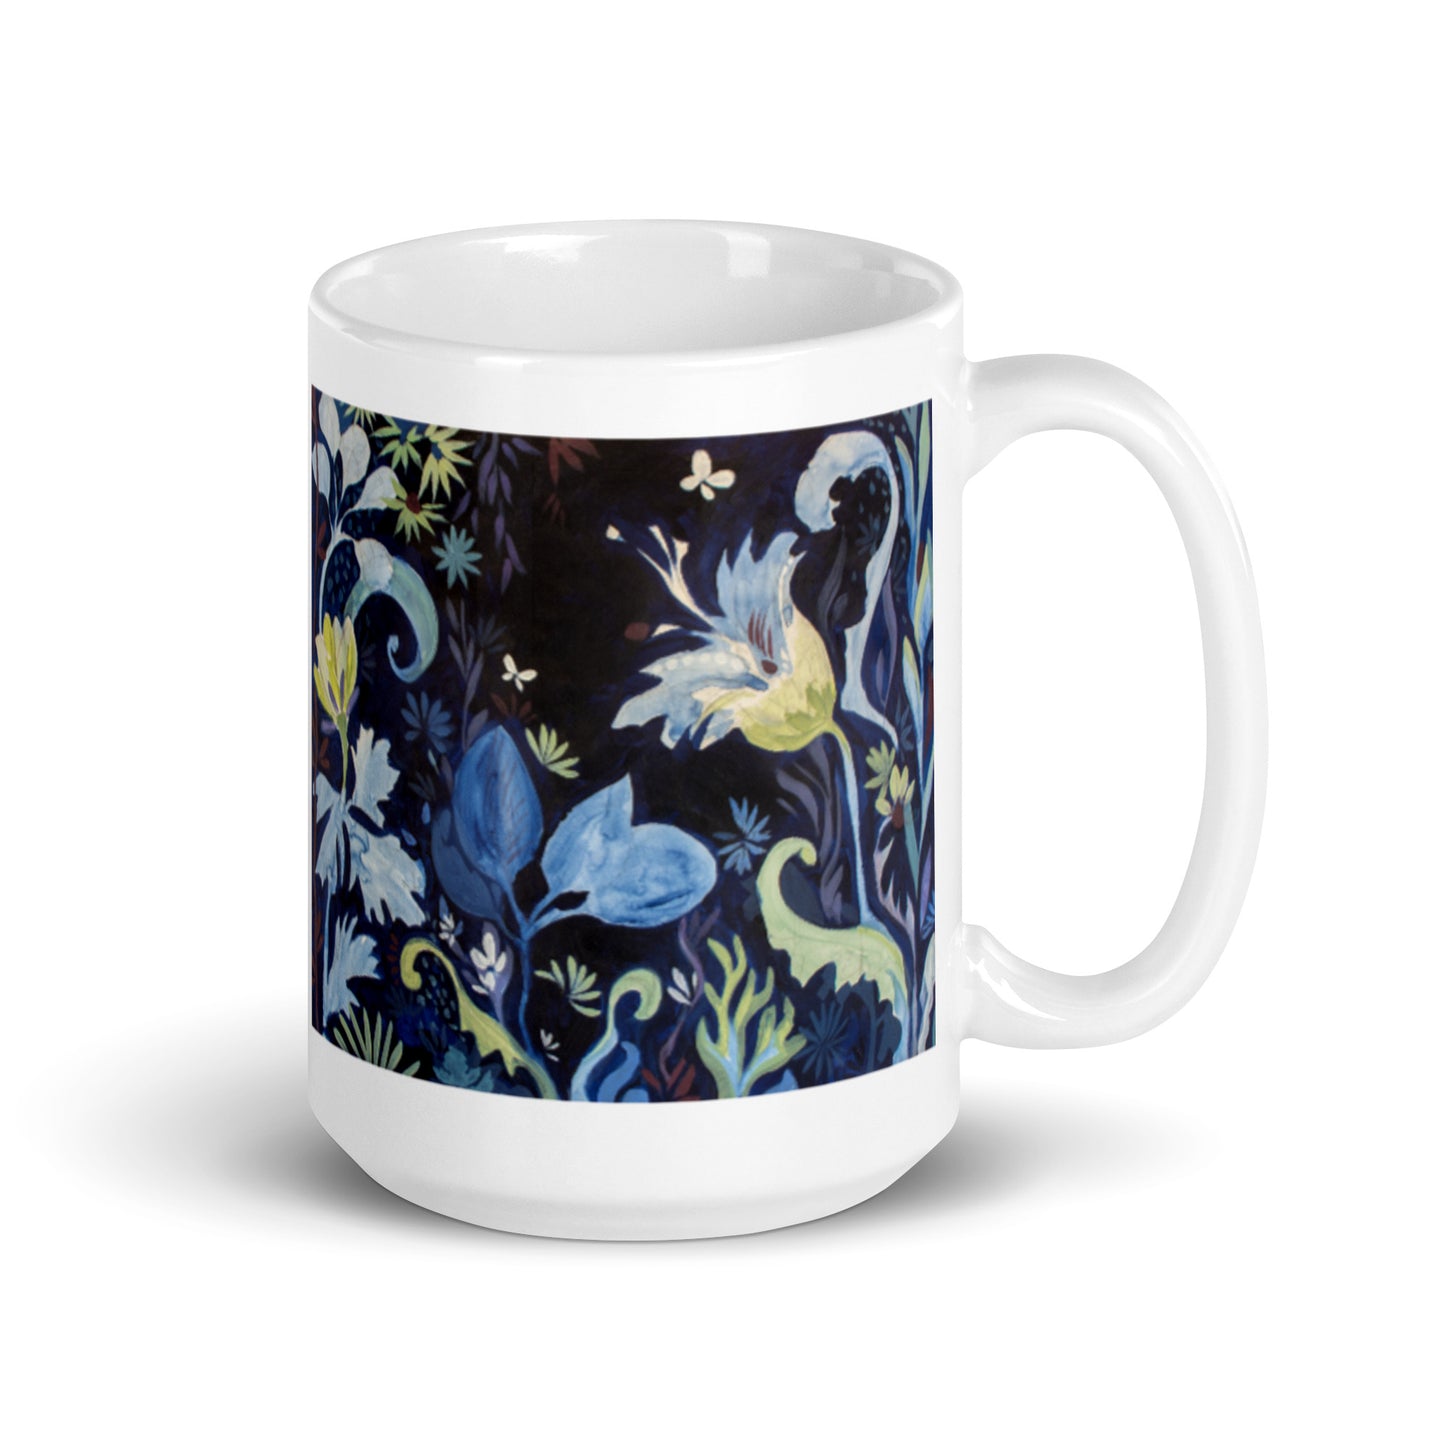 Blue Nightfall 3 glossy mug